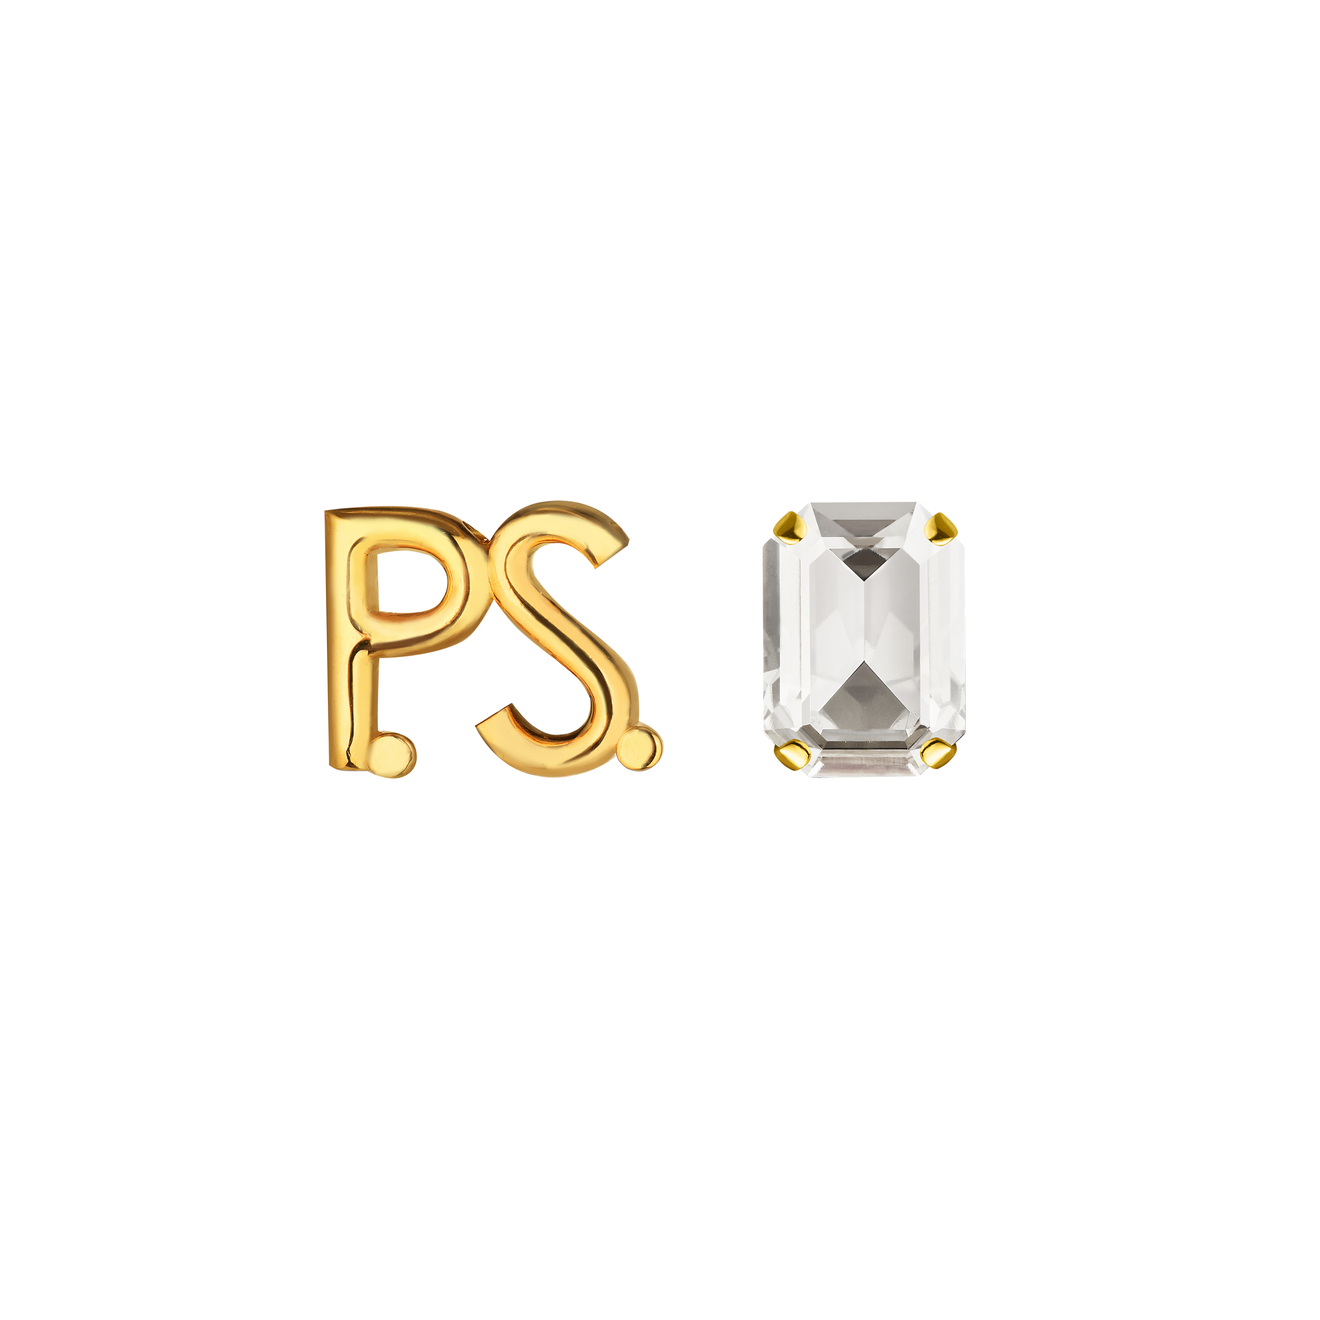 Phenomenal Studio Позолоченные серьги с фирменным логотипом и крупным кристаллом P.S. Crystal Gold phenomenal studio колье love из жемчуга с кристаллом сердцем